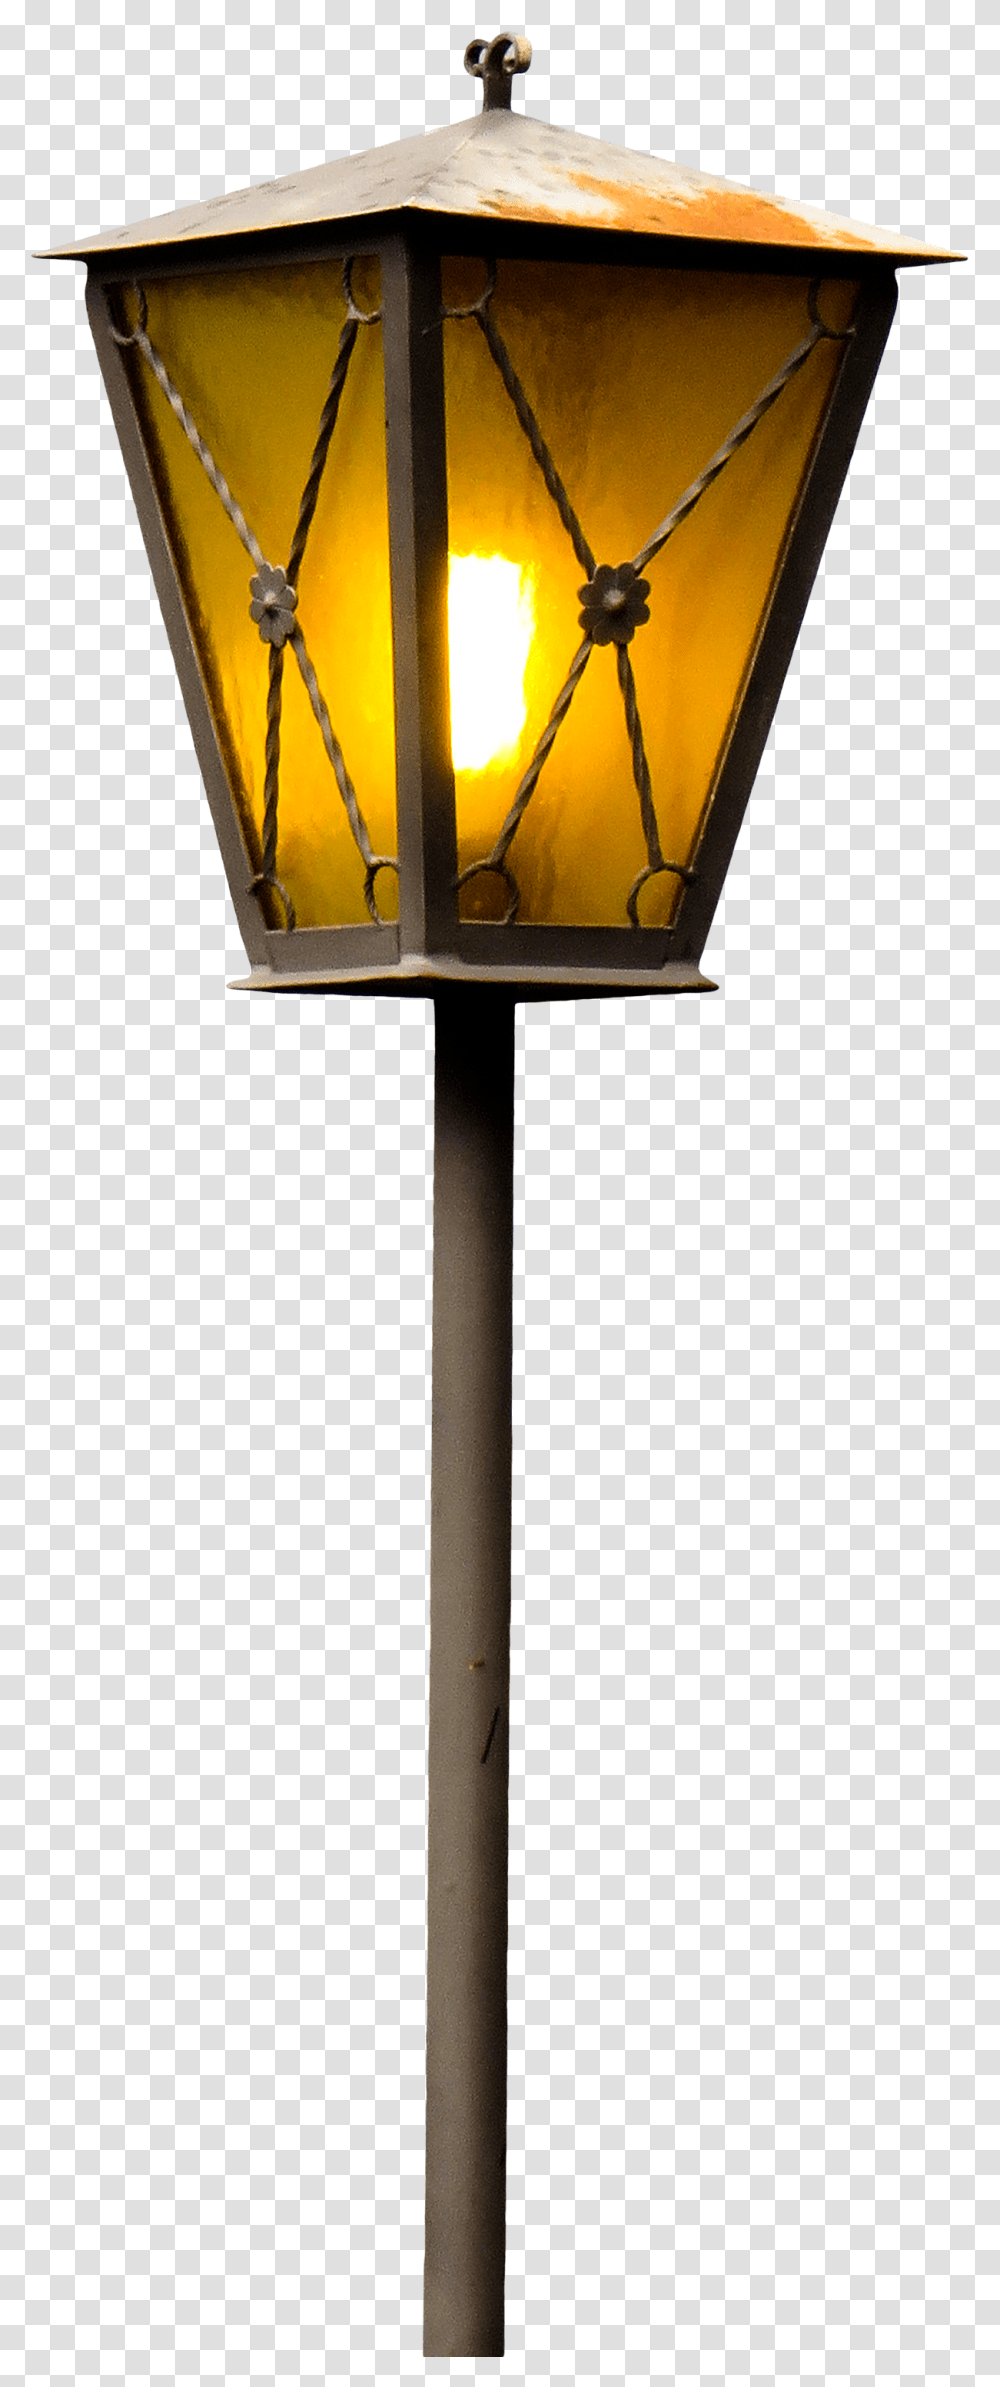 Old Street Lamp Image Light For Picsart, Lampshade, Lantern, Lamp Post Transparent Png